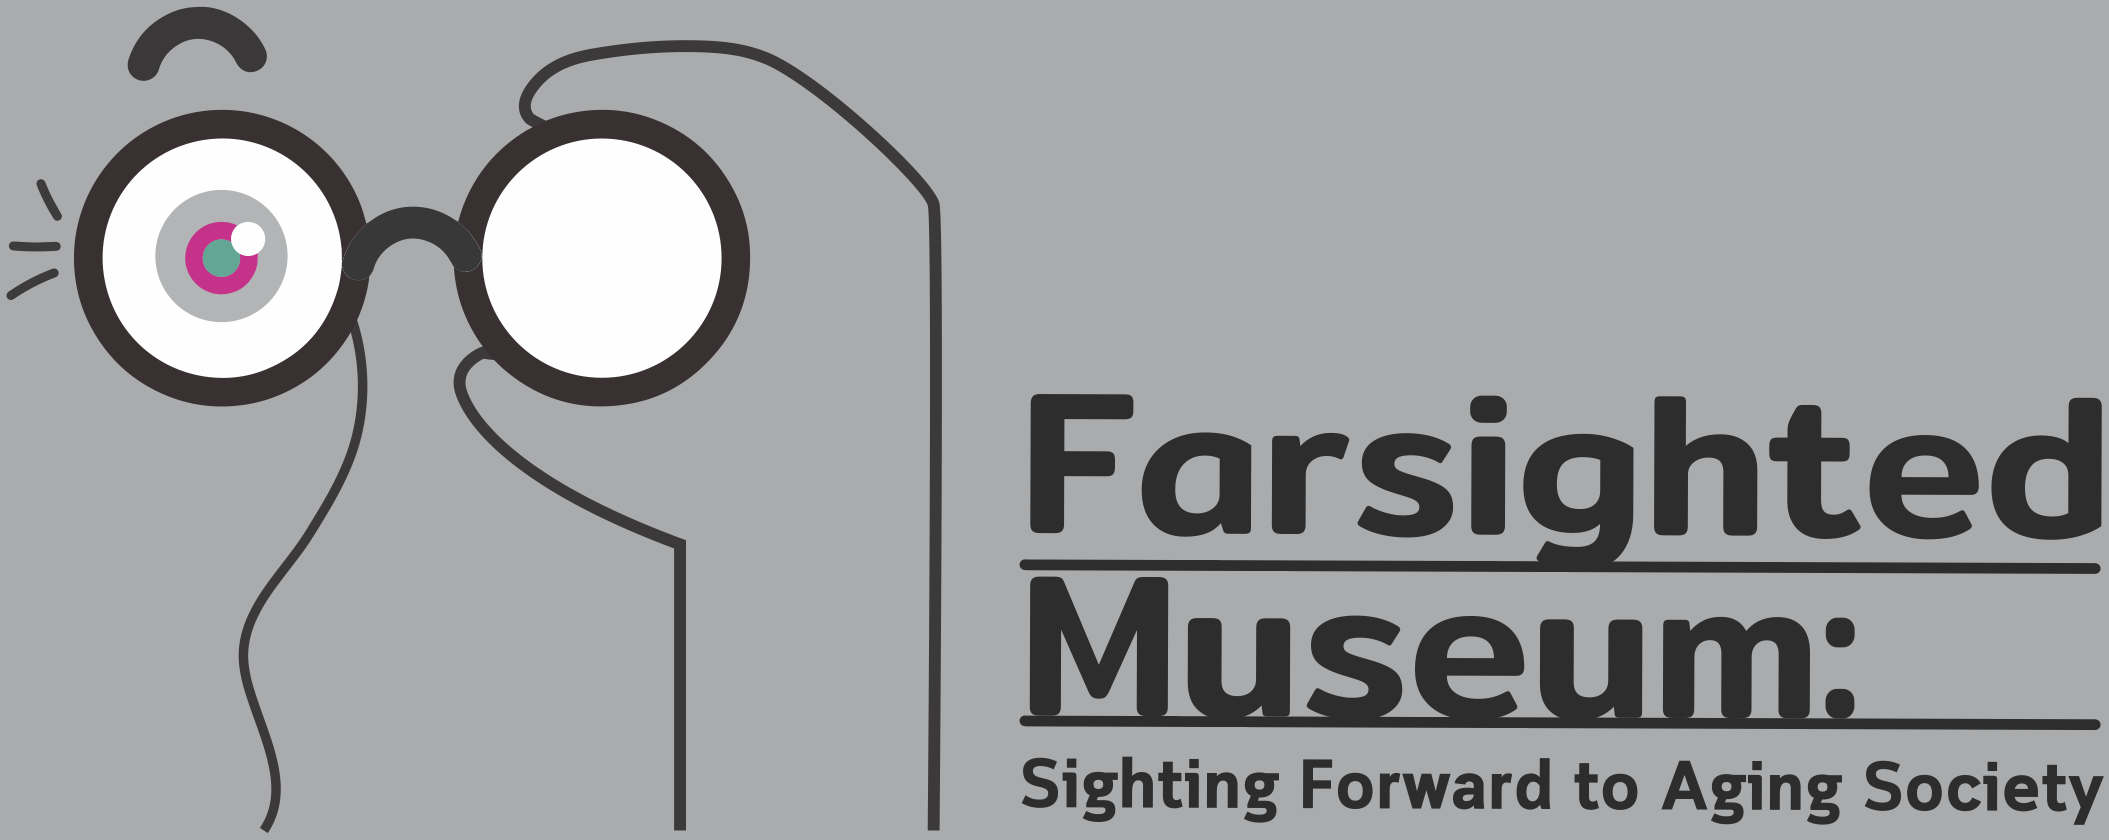 Farsighted Museum